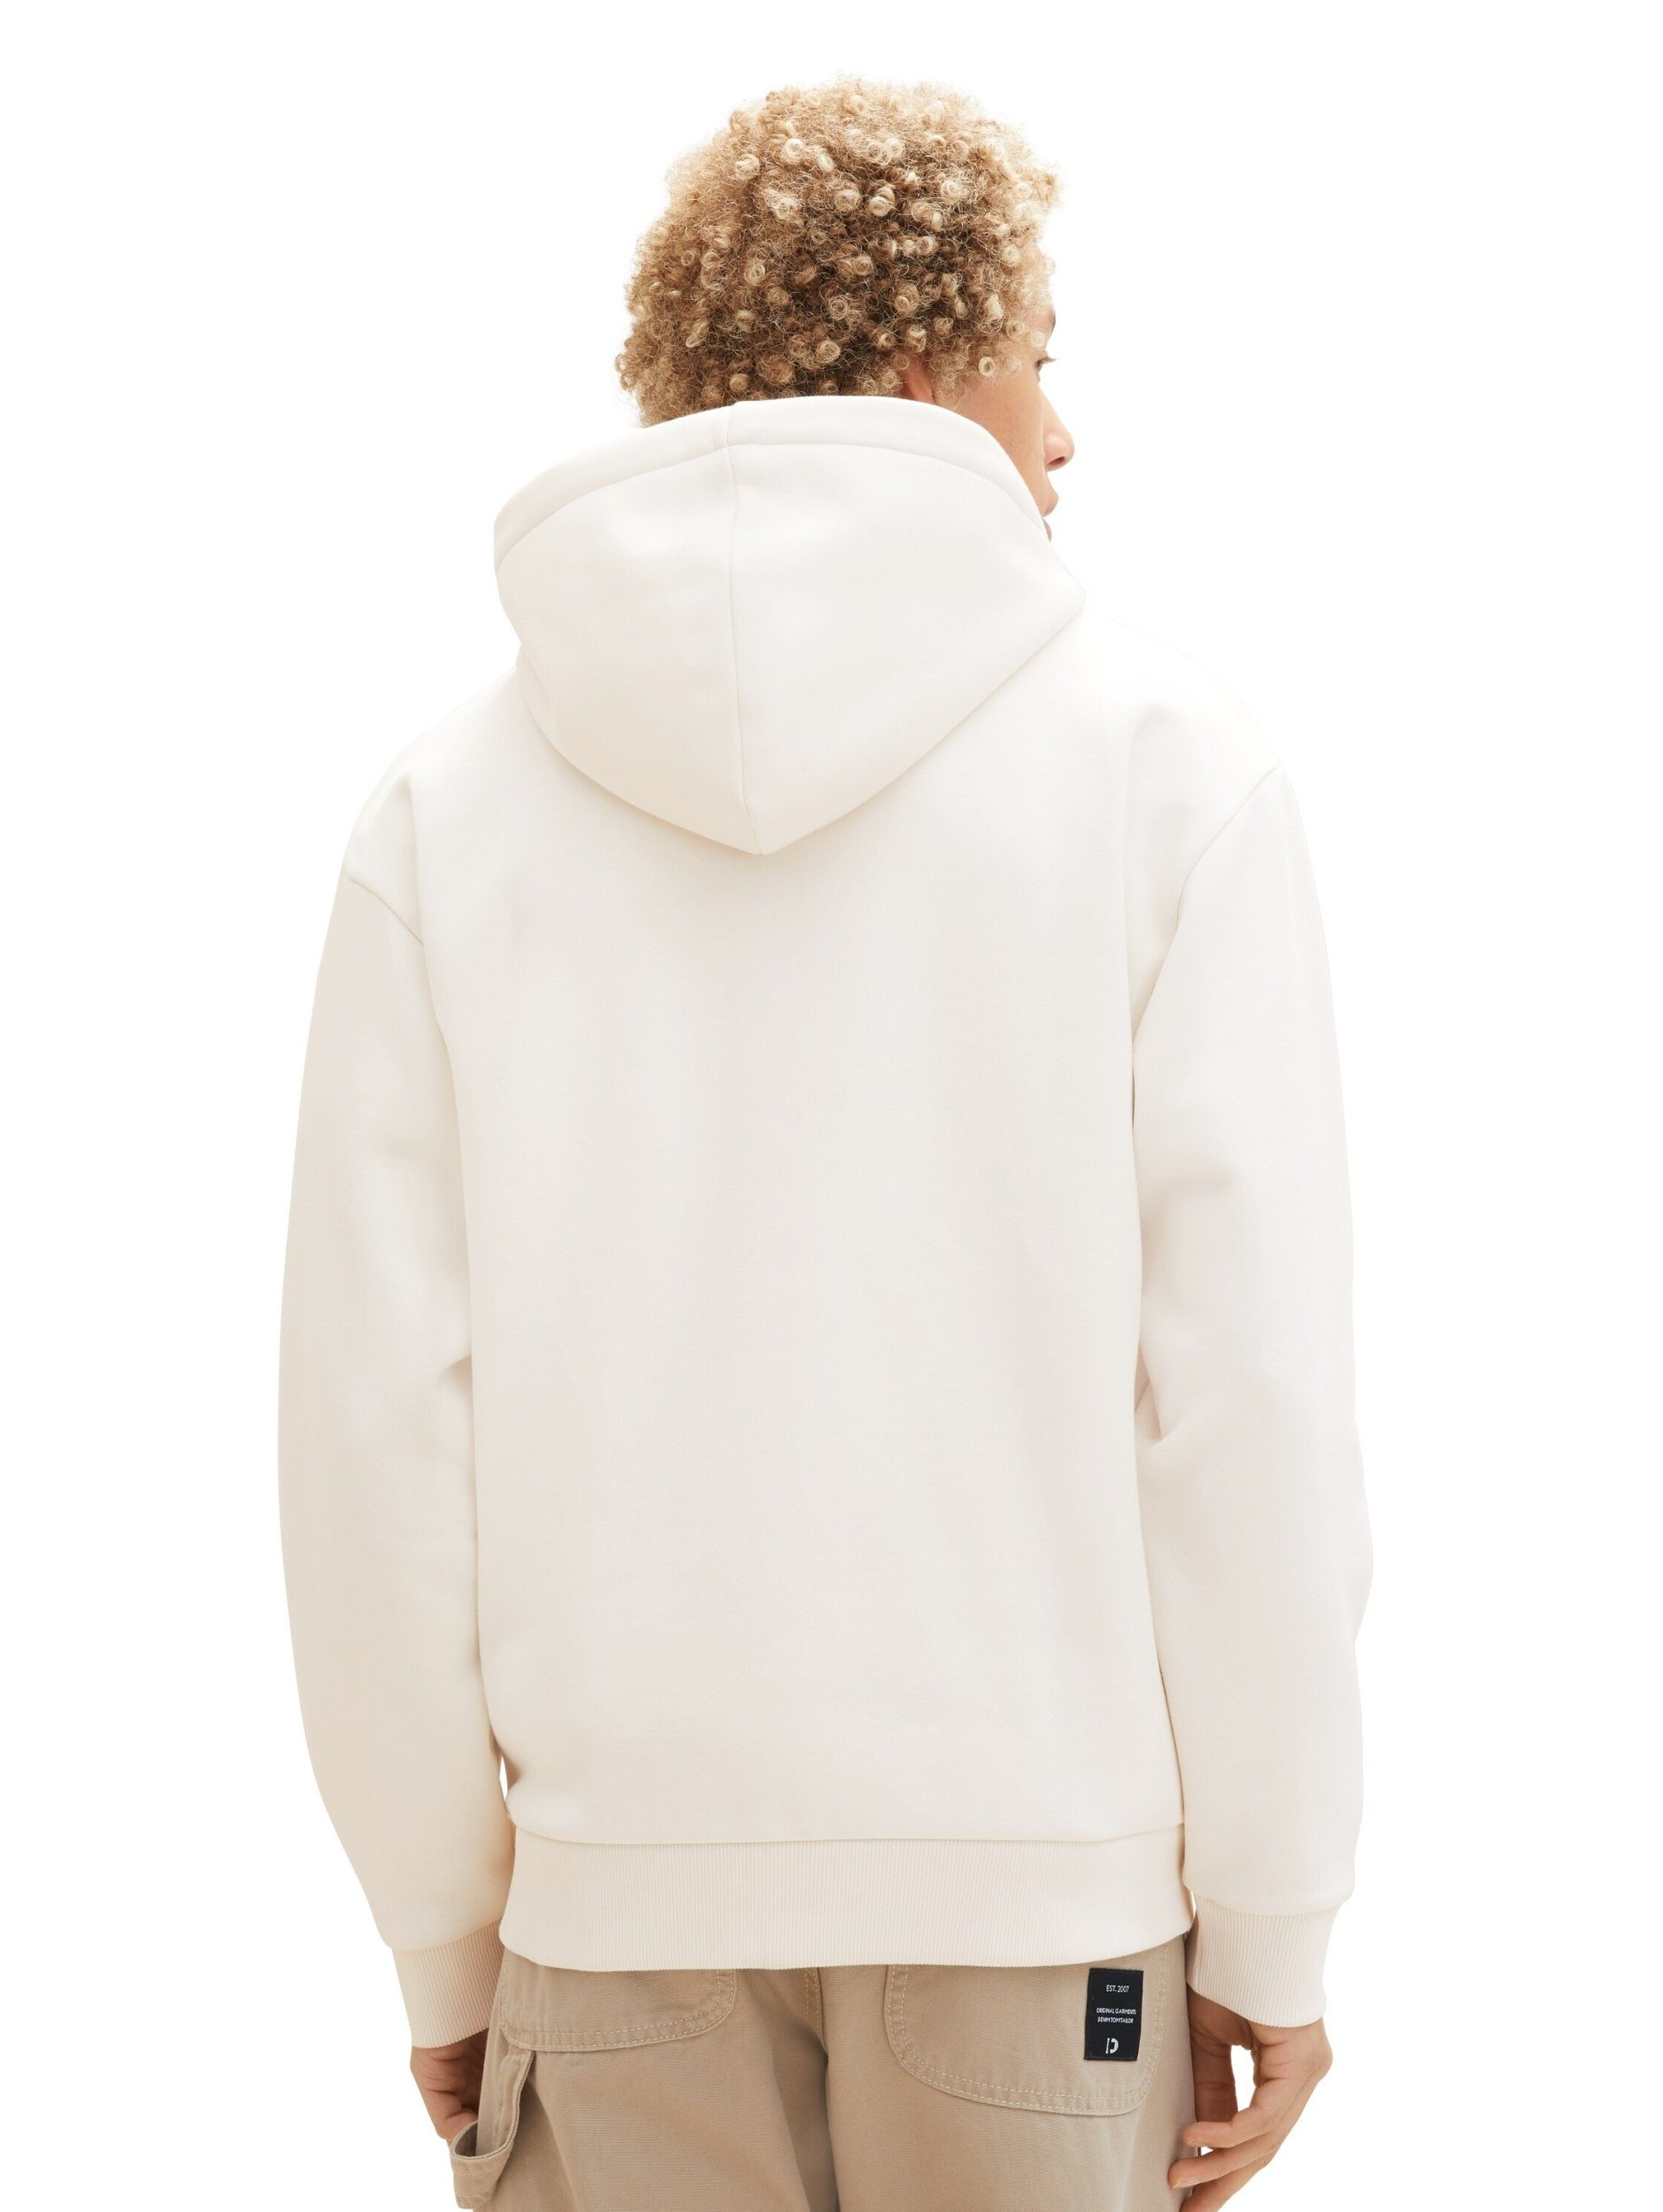 TOM Sweatshirt TAILOR hoodie White embroidery with Wool Denim jacket